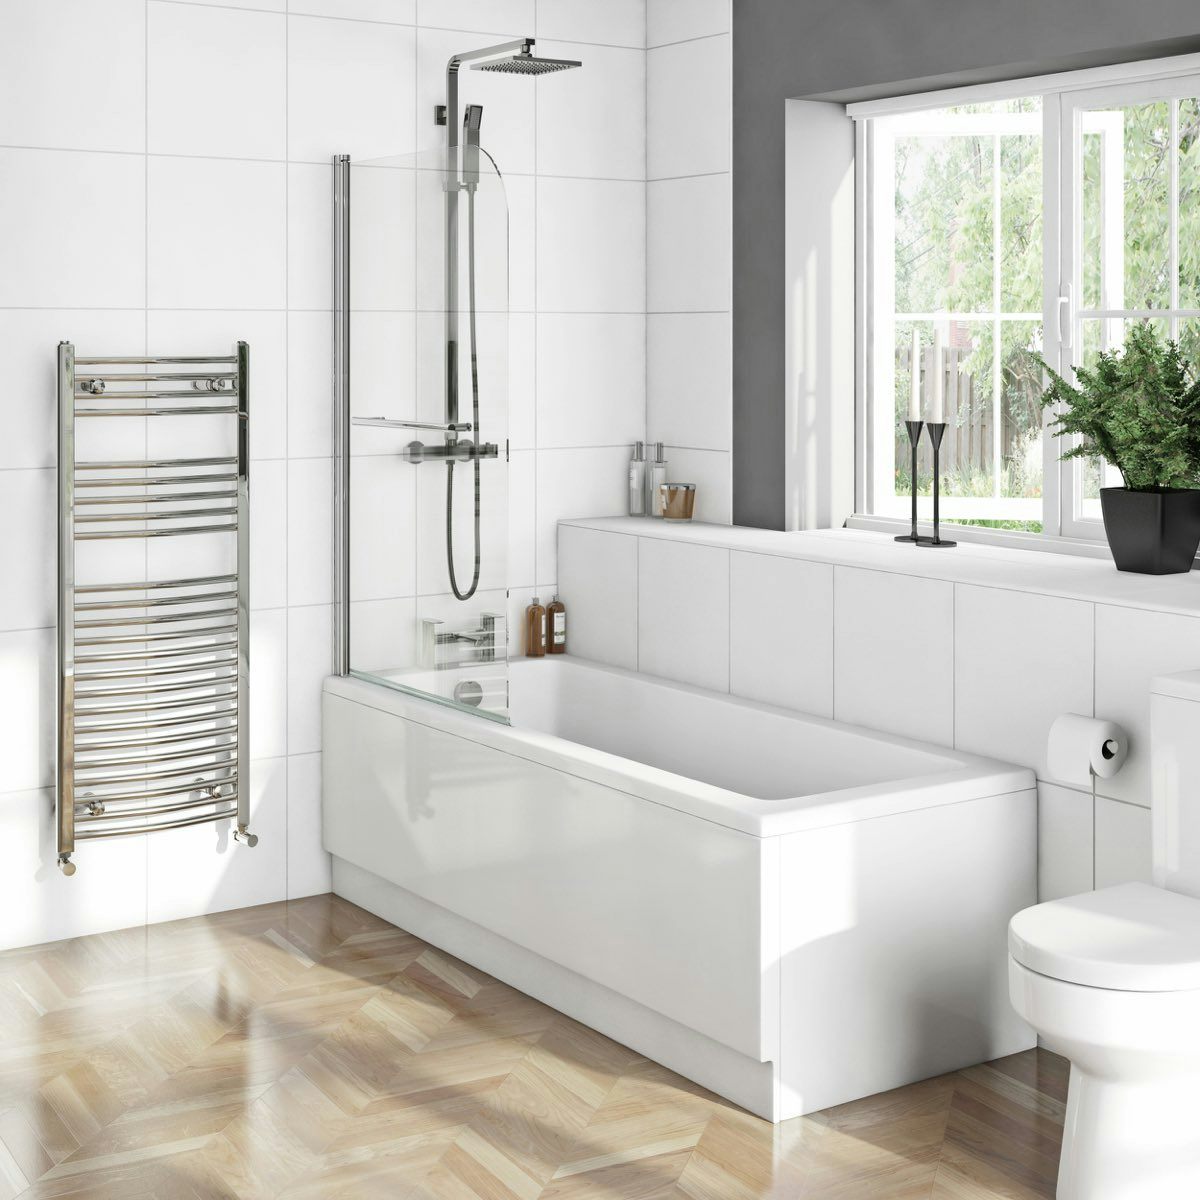 Kensington bath with single shower screen